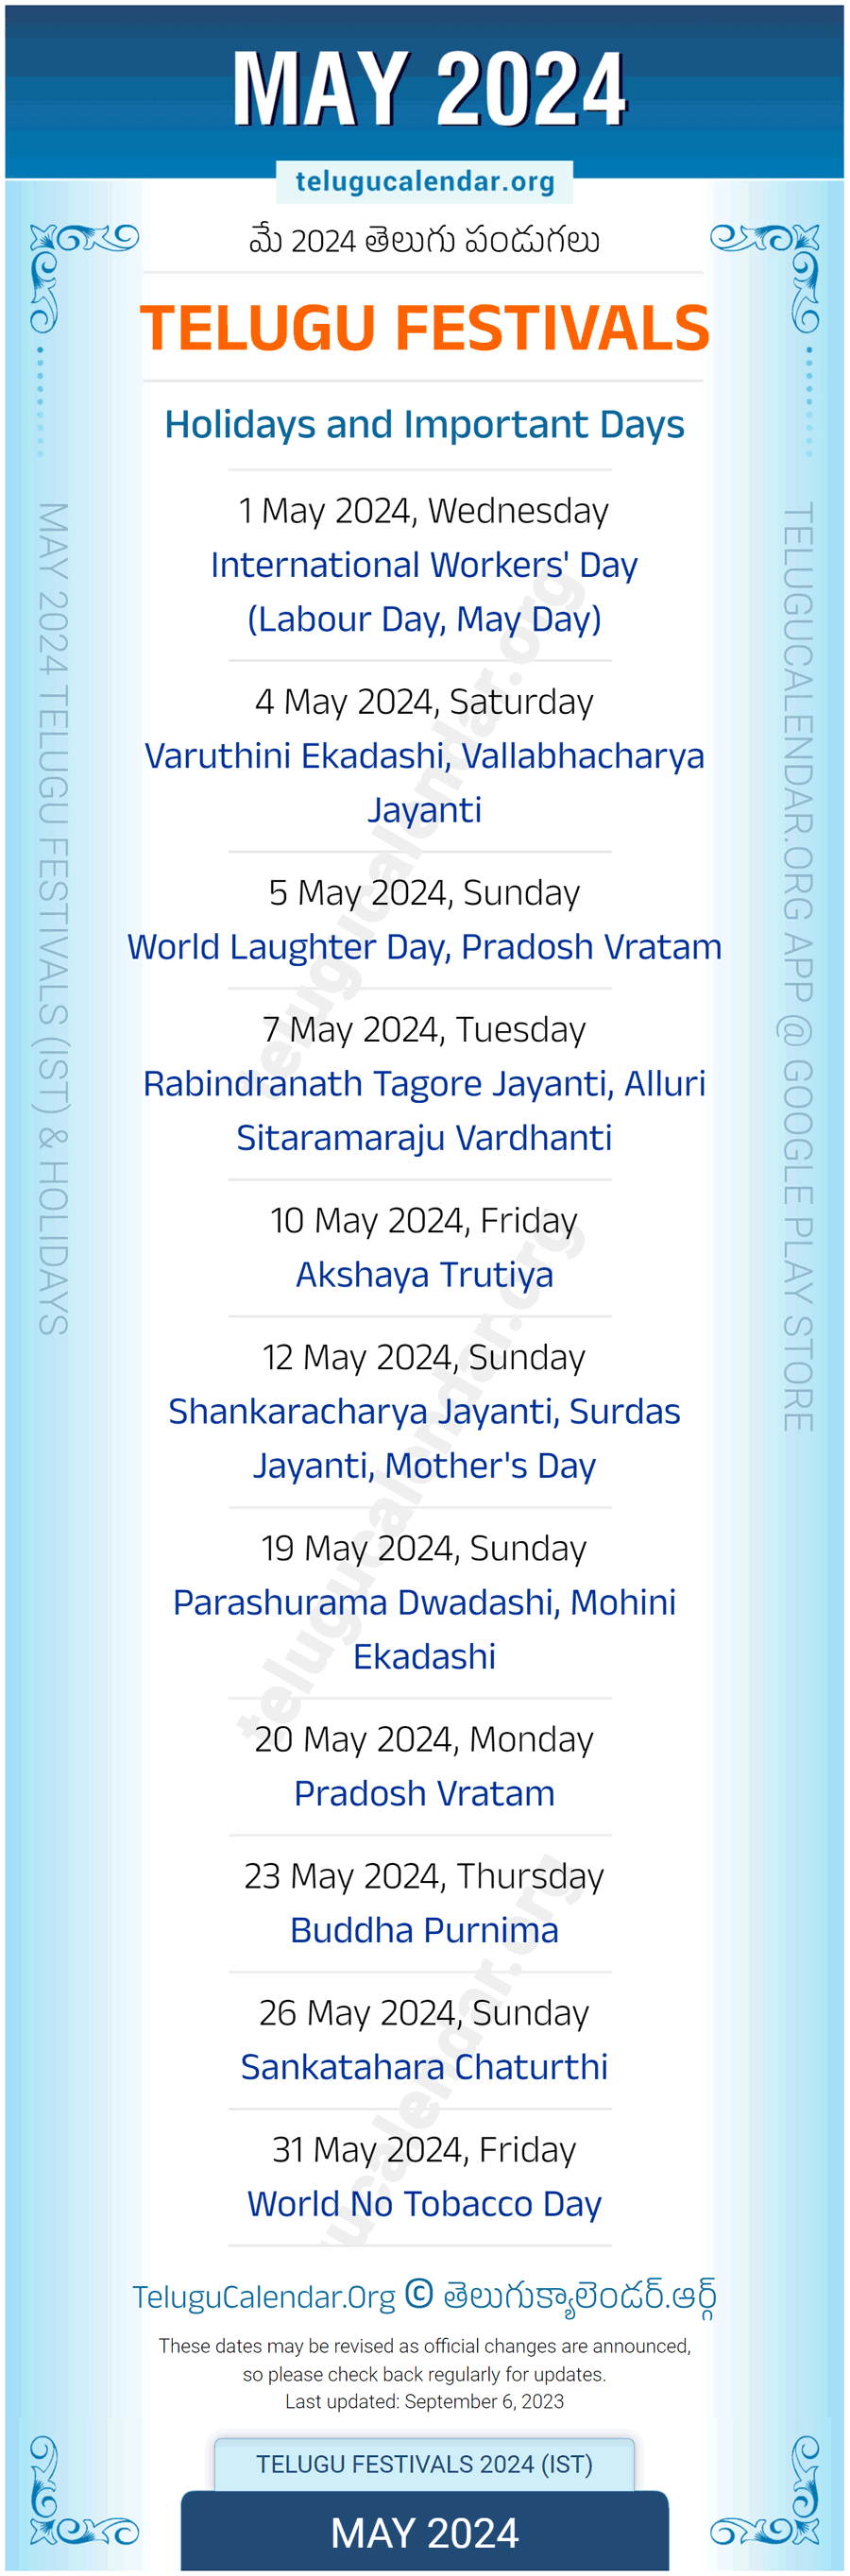 Telugu Festivals 2024 May